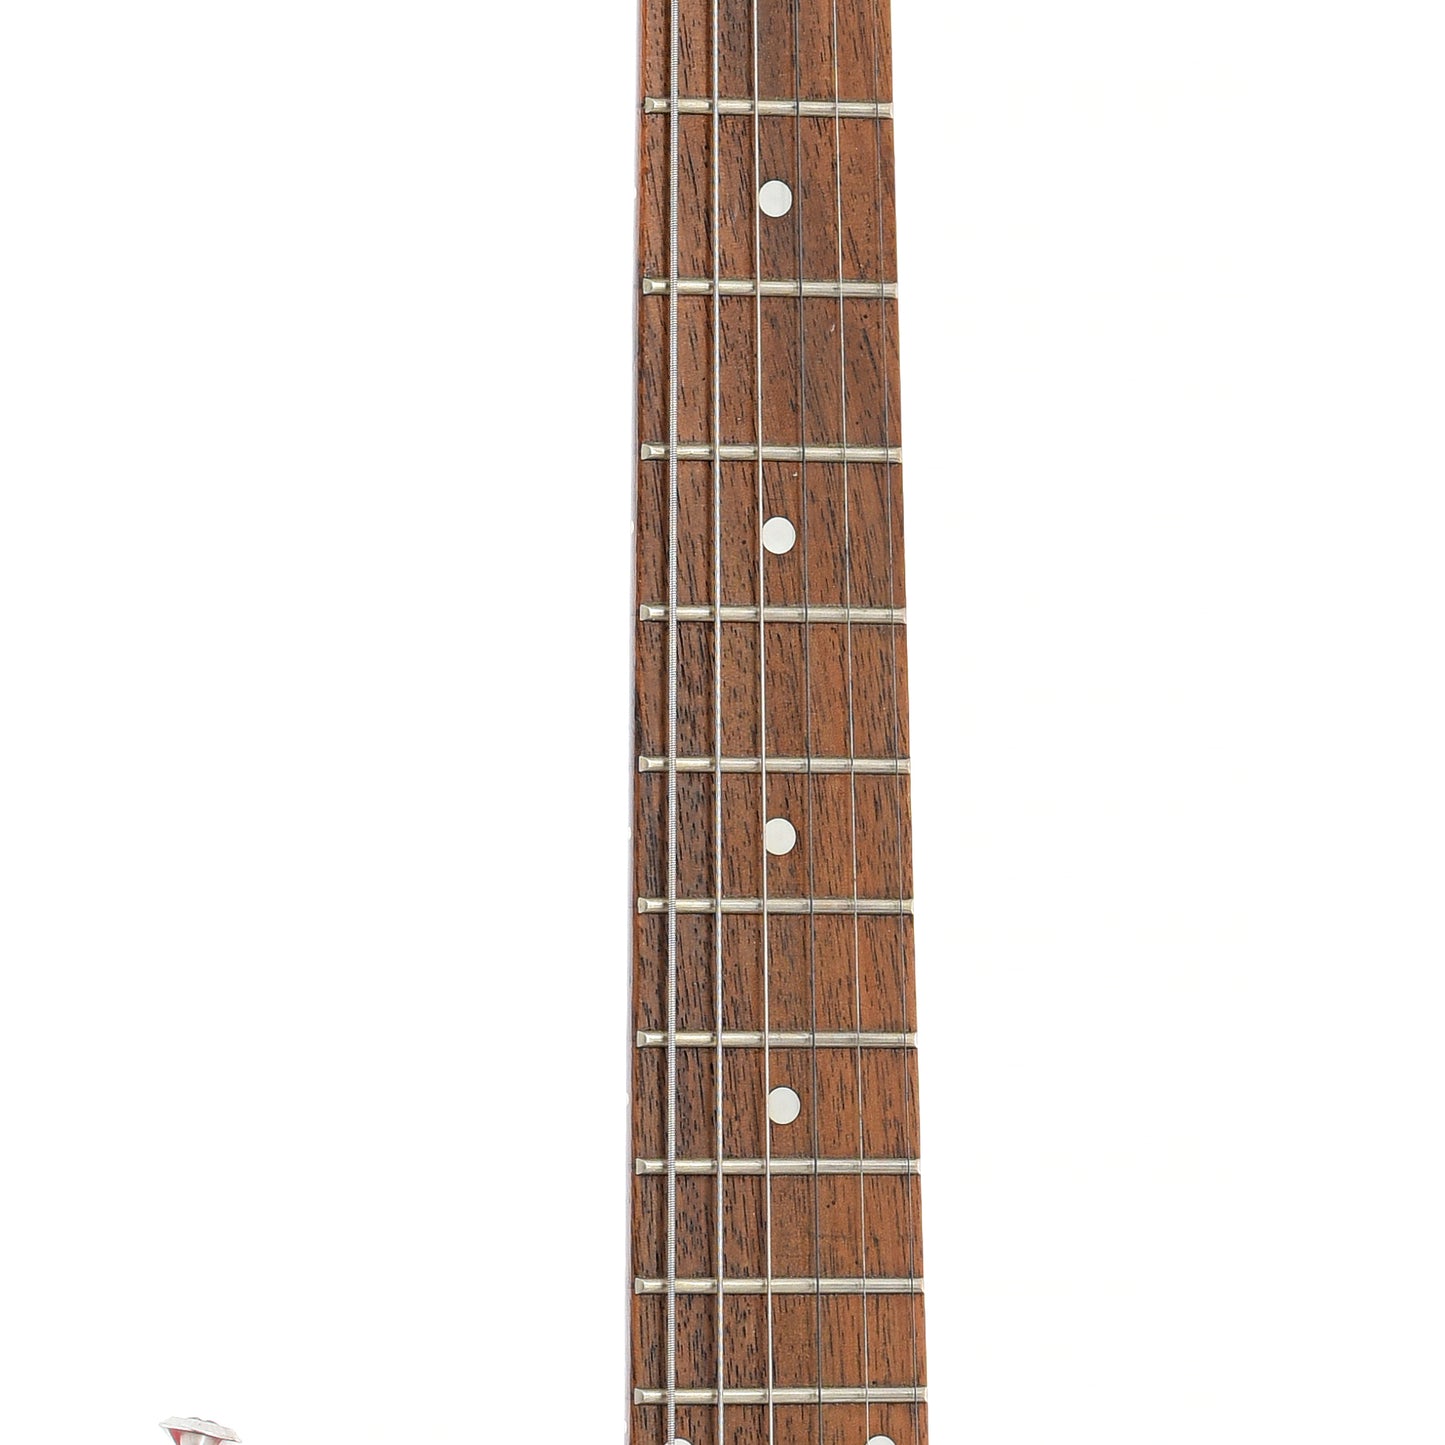 Fretboard of Squier Mini Stratocaster Electric Guitar